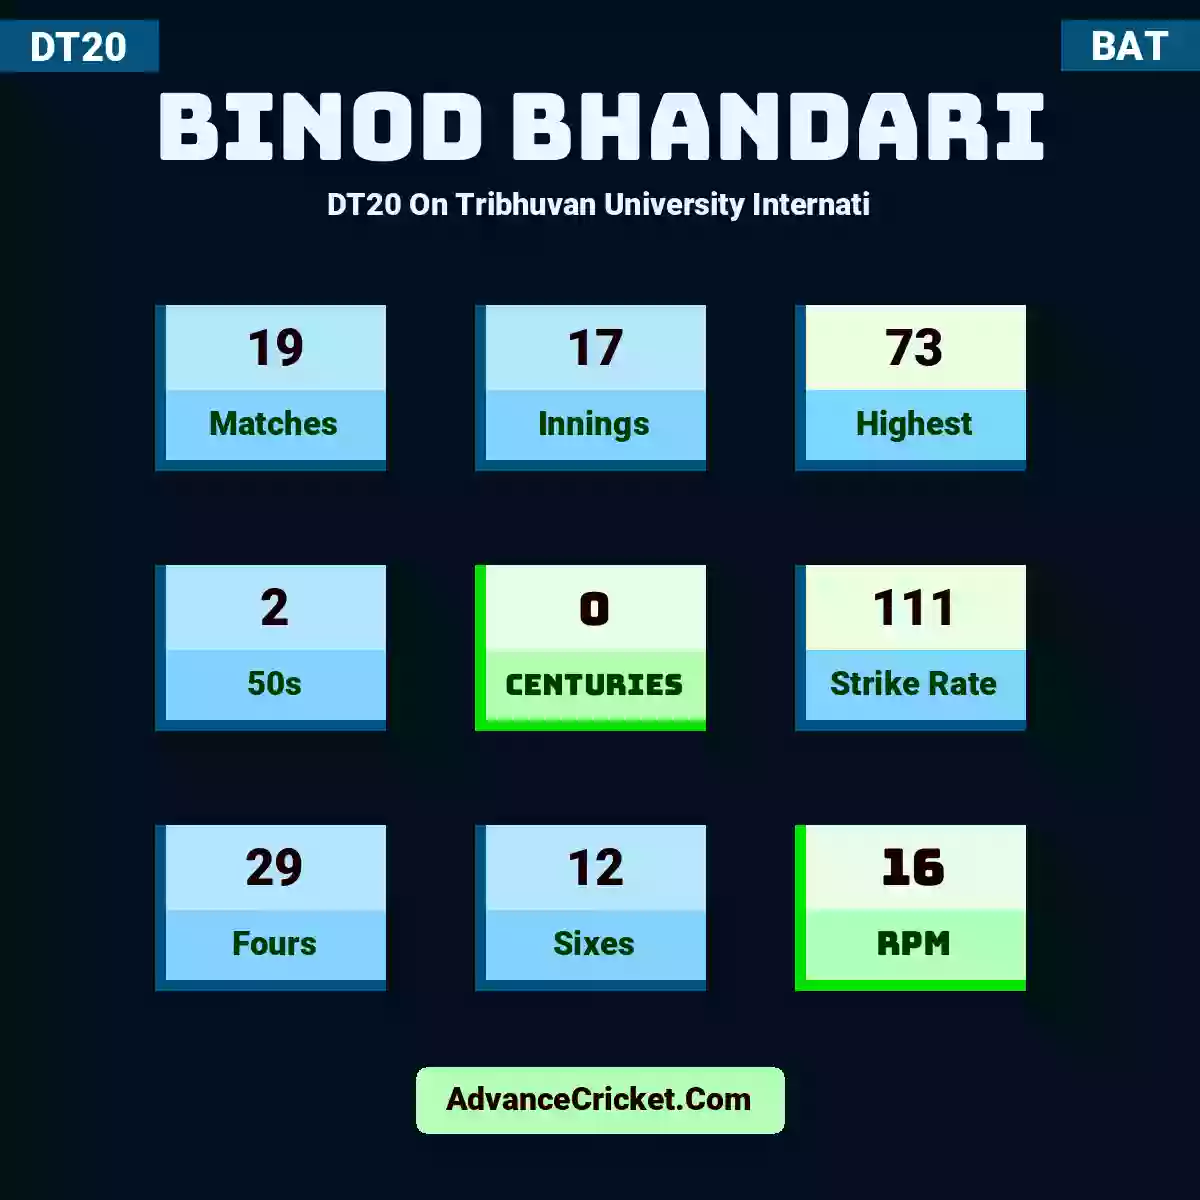 Binod Bhandari DT20  On Tribhuvan University Internati, Binod Bhandari played 19 matches, scored 73 runs as highest, 2 half-centuries, and 0 centuries, with a strike rate of 111. B.Bhandari hit 29 fours and 12 sixes, with an RPM of 16.